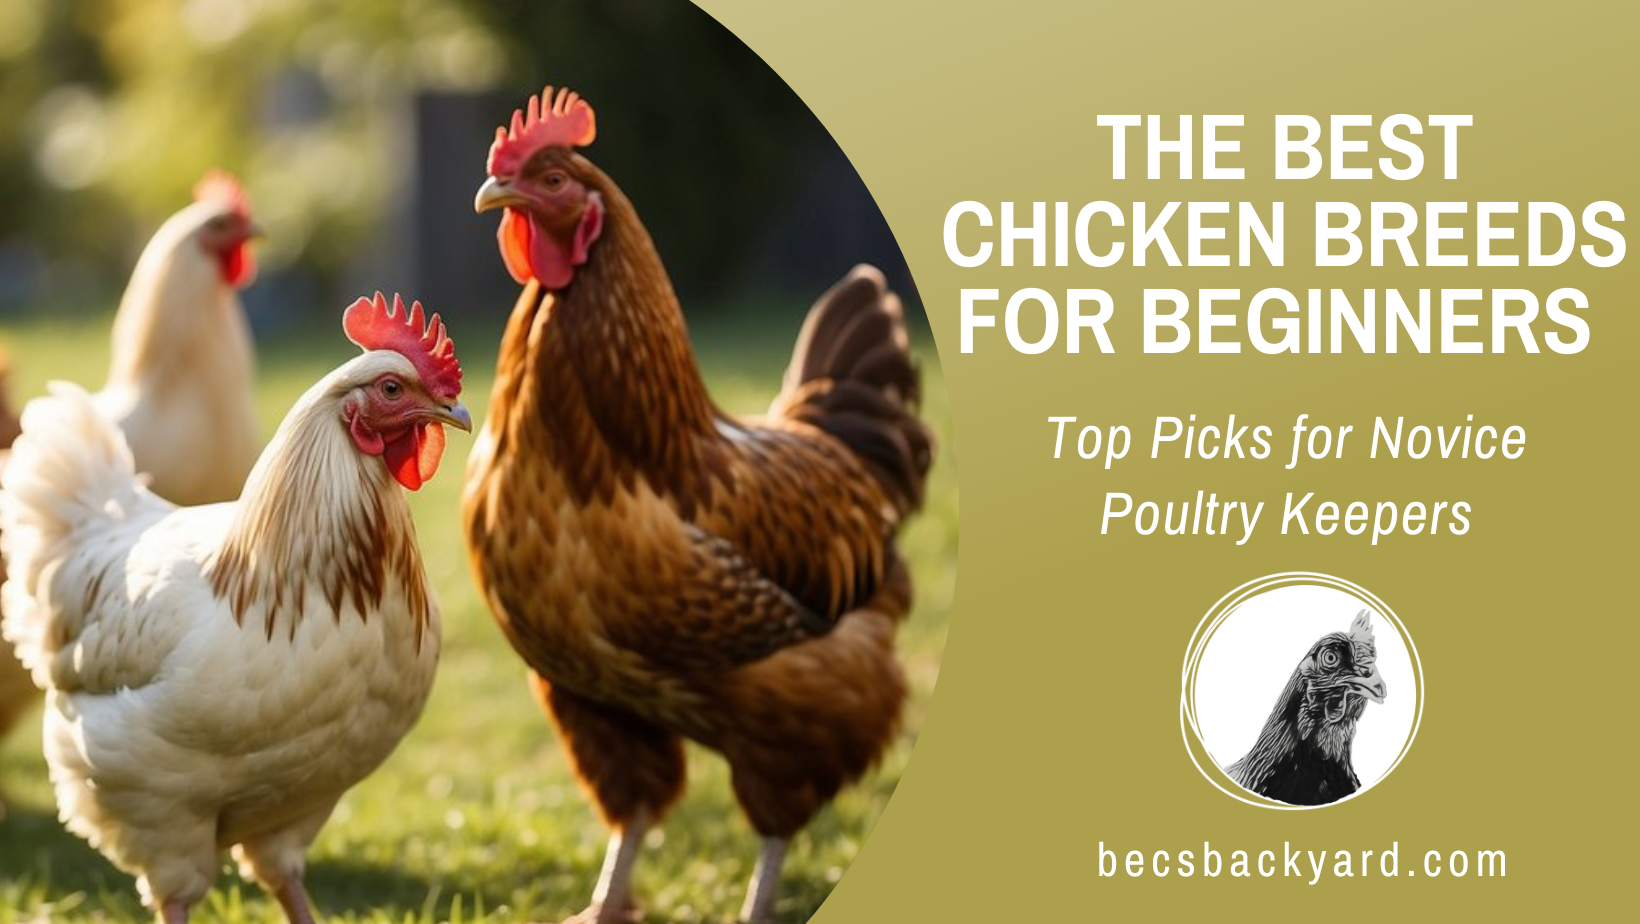 The Best Chicken Breeds for Beginners